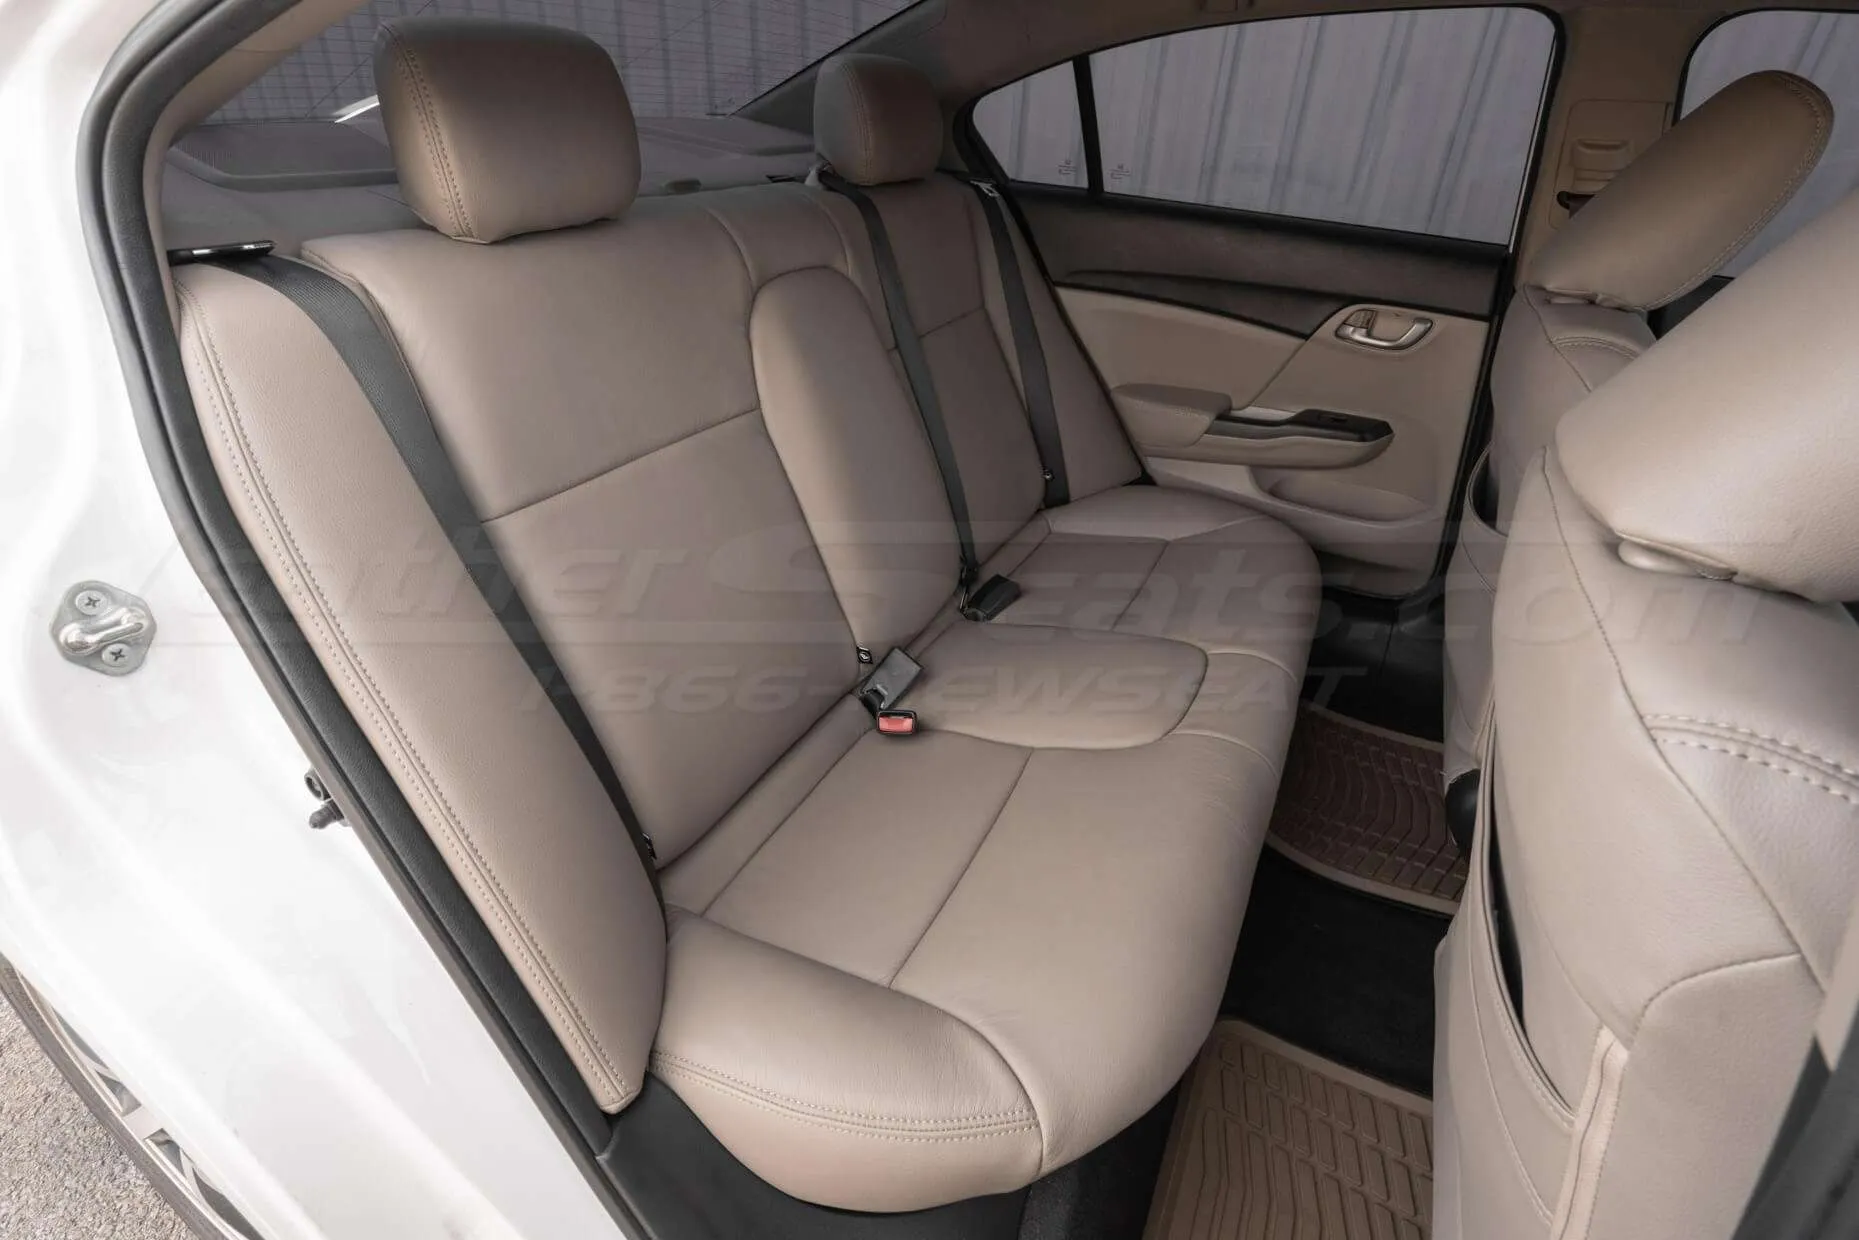 Fawn leather rear seats in Honda Civic Sedan